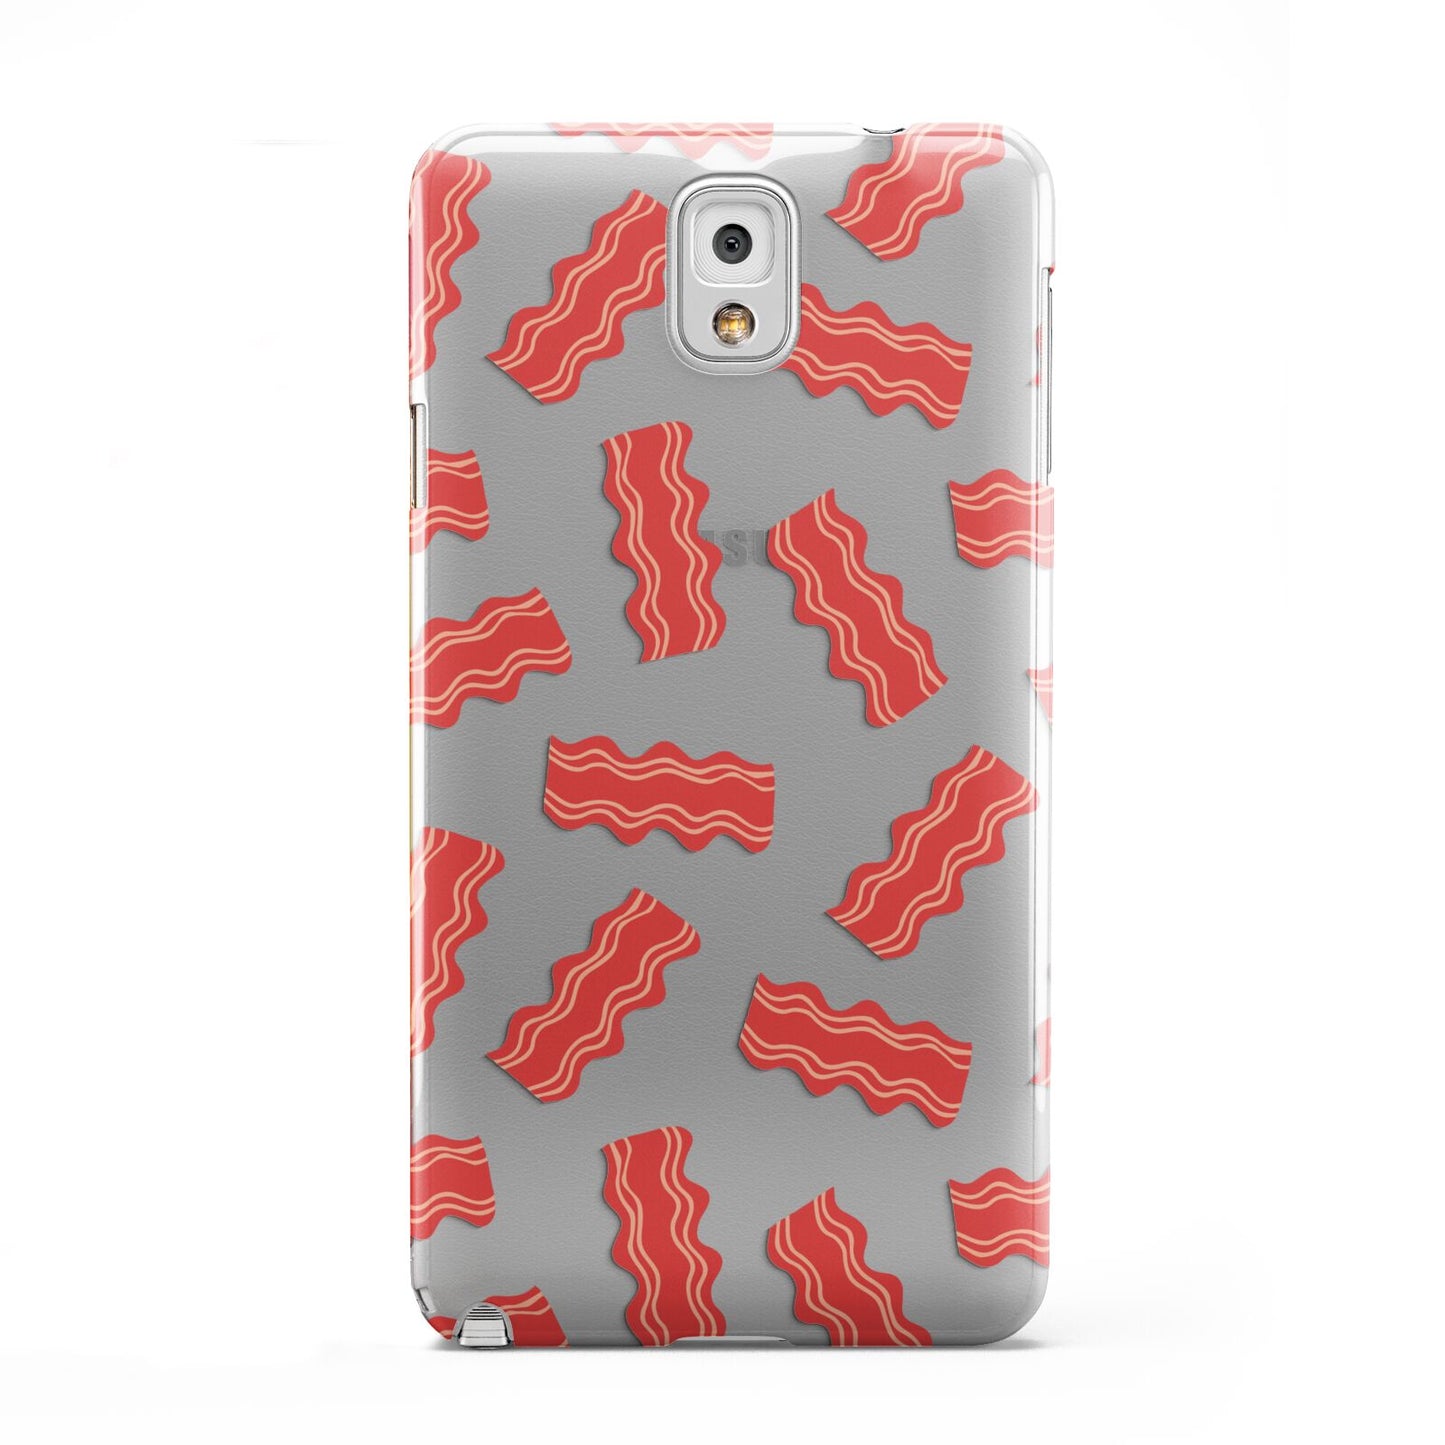 Bacon Samsung Galaxy Note 3 Case